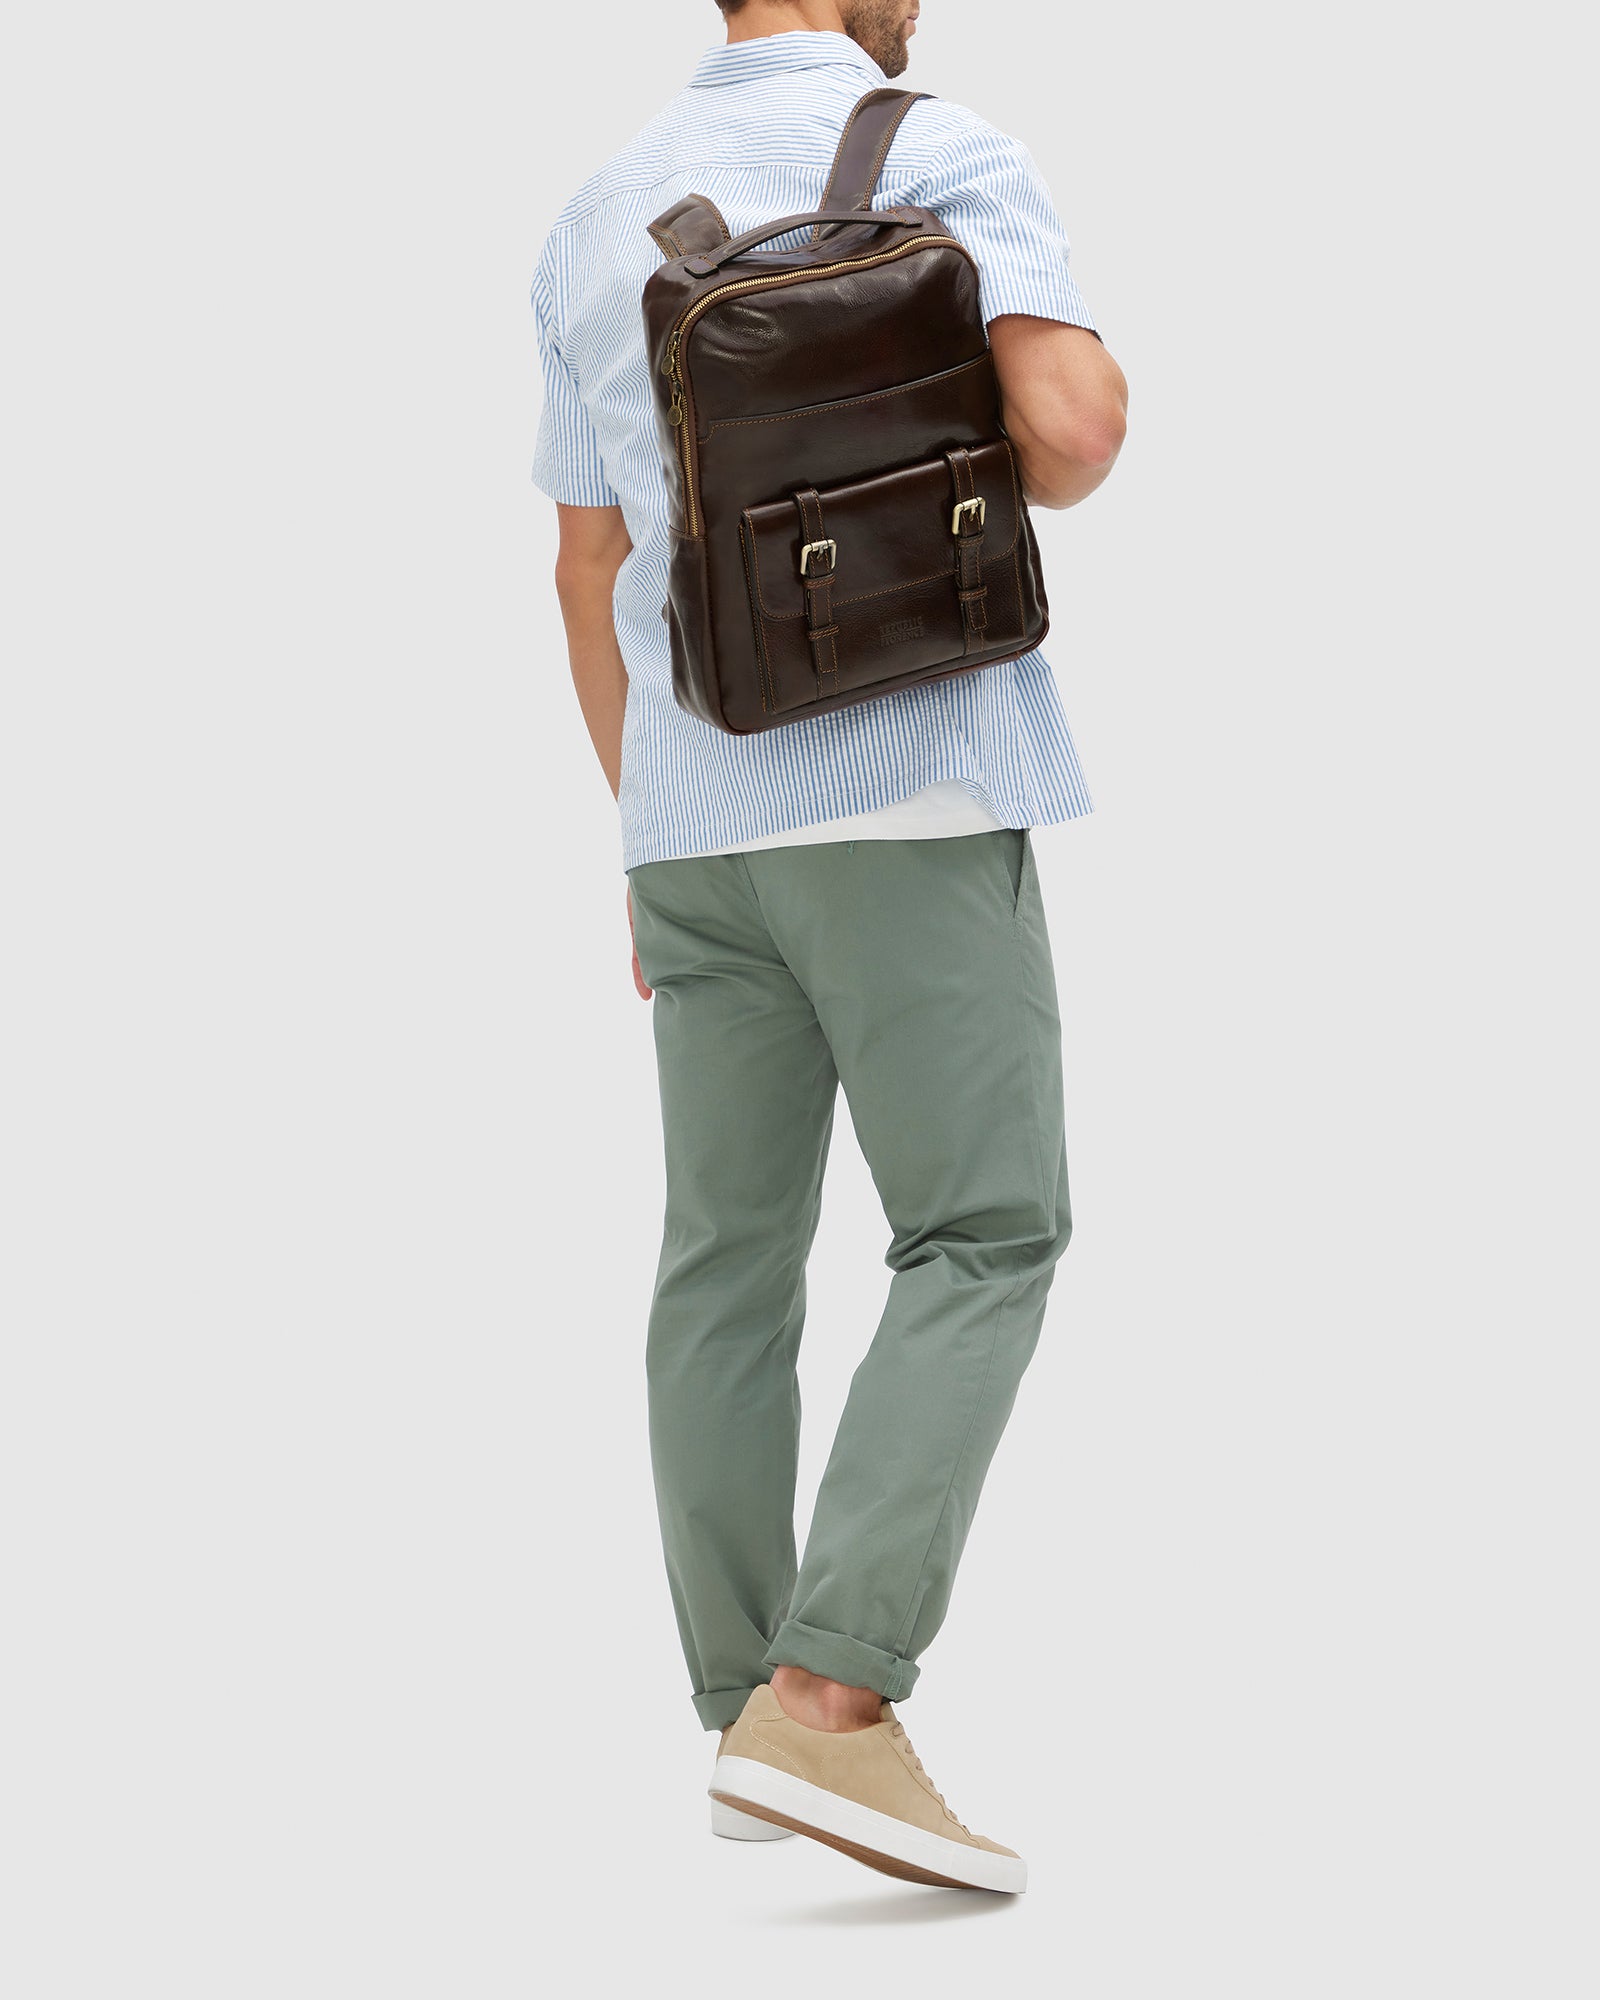 Salvador Brown - Leather Backpack